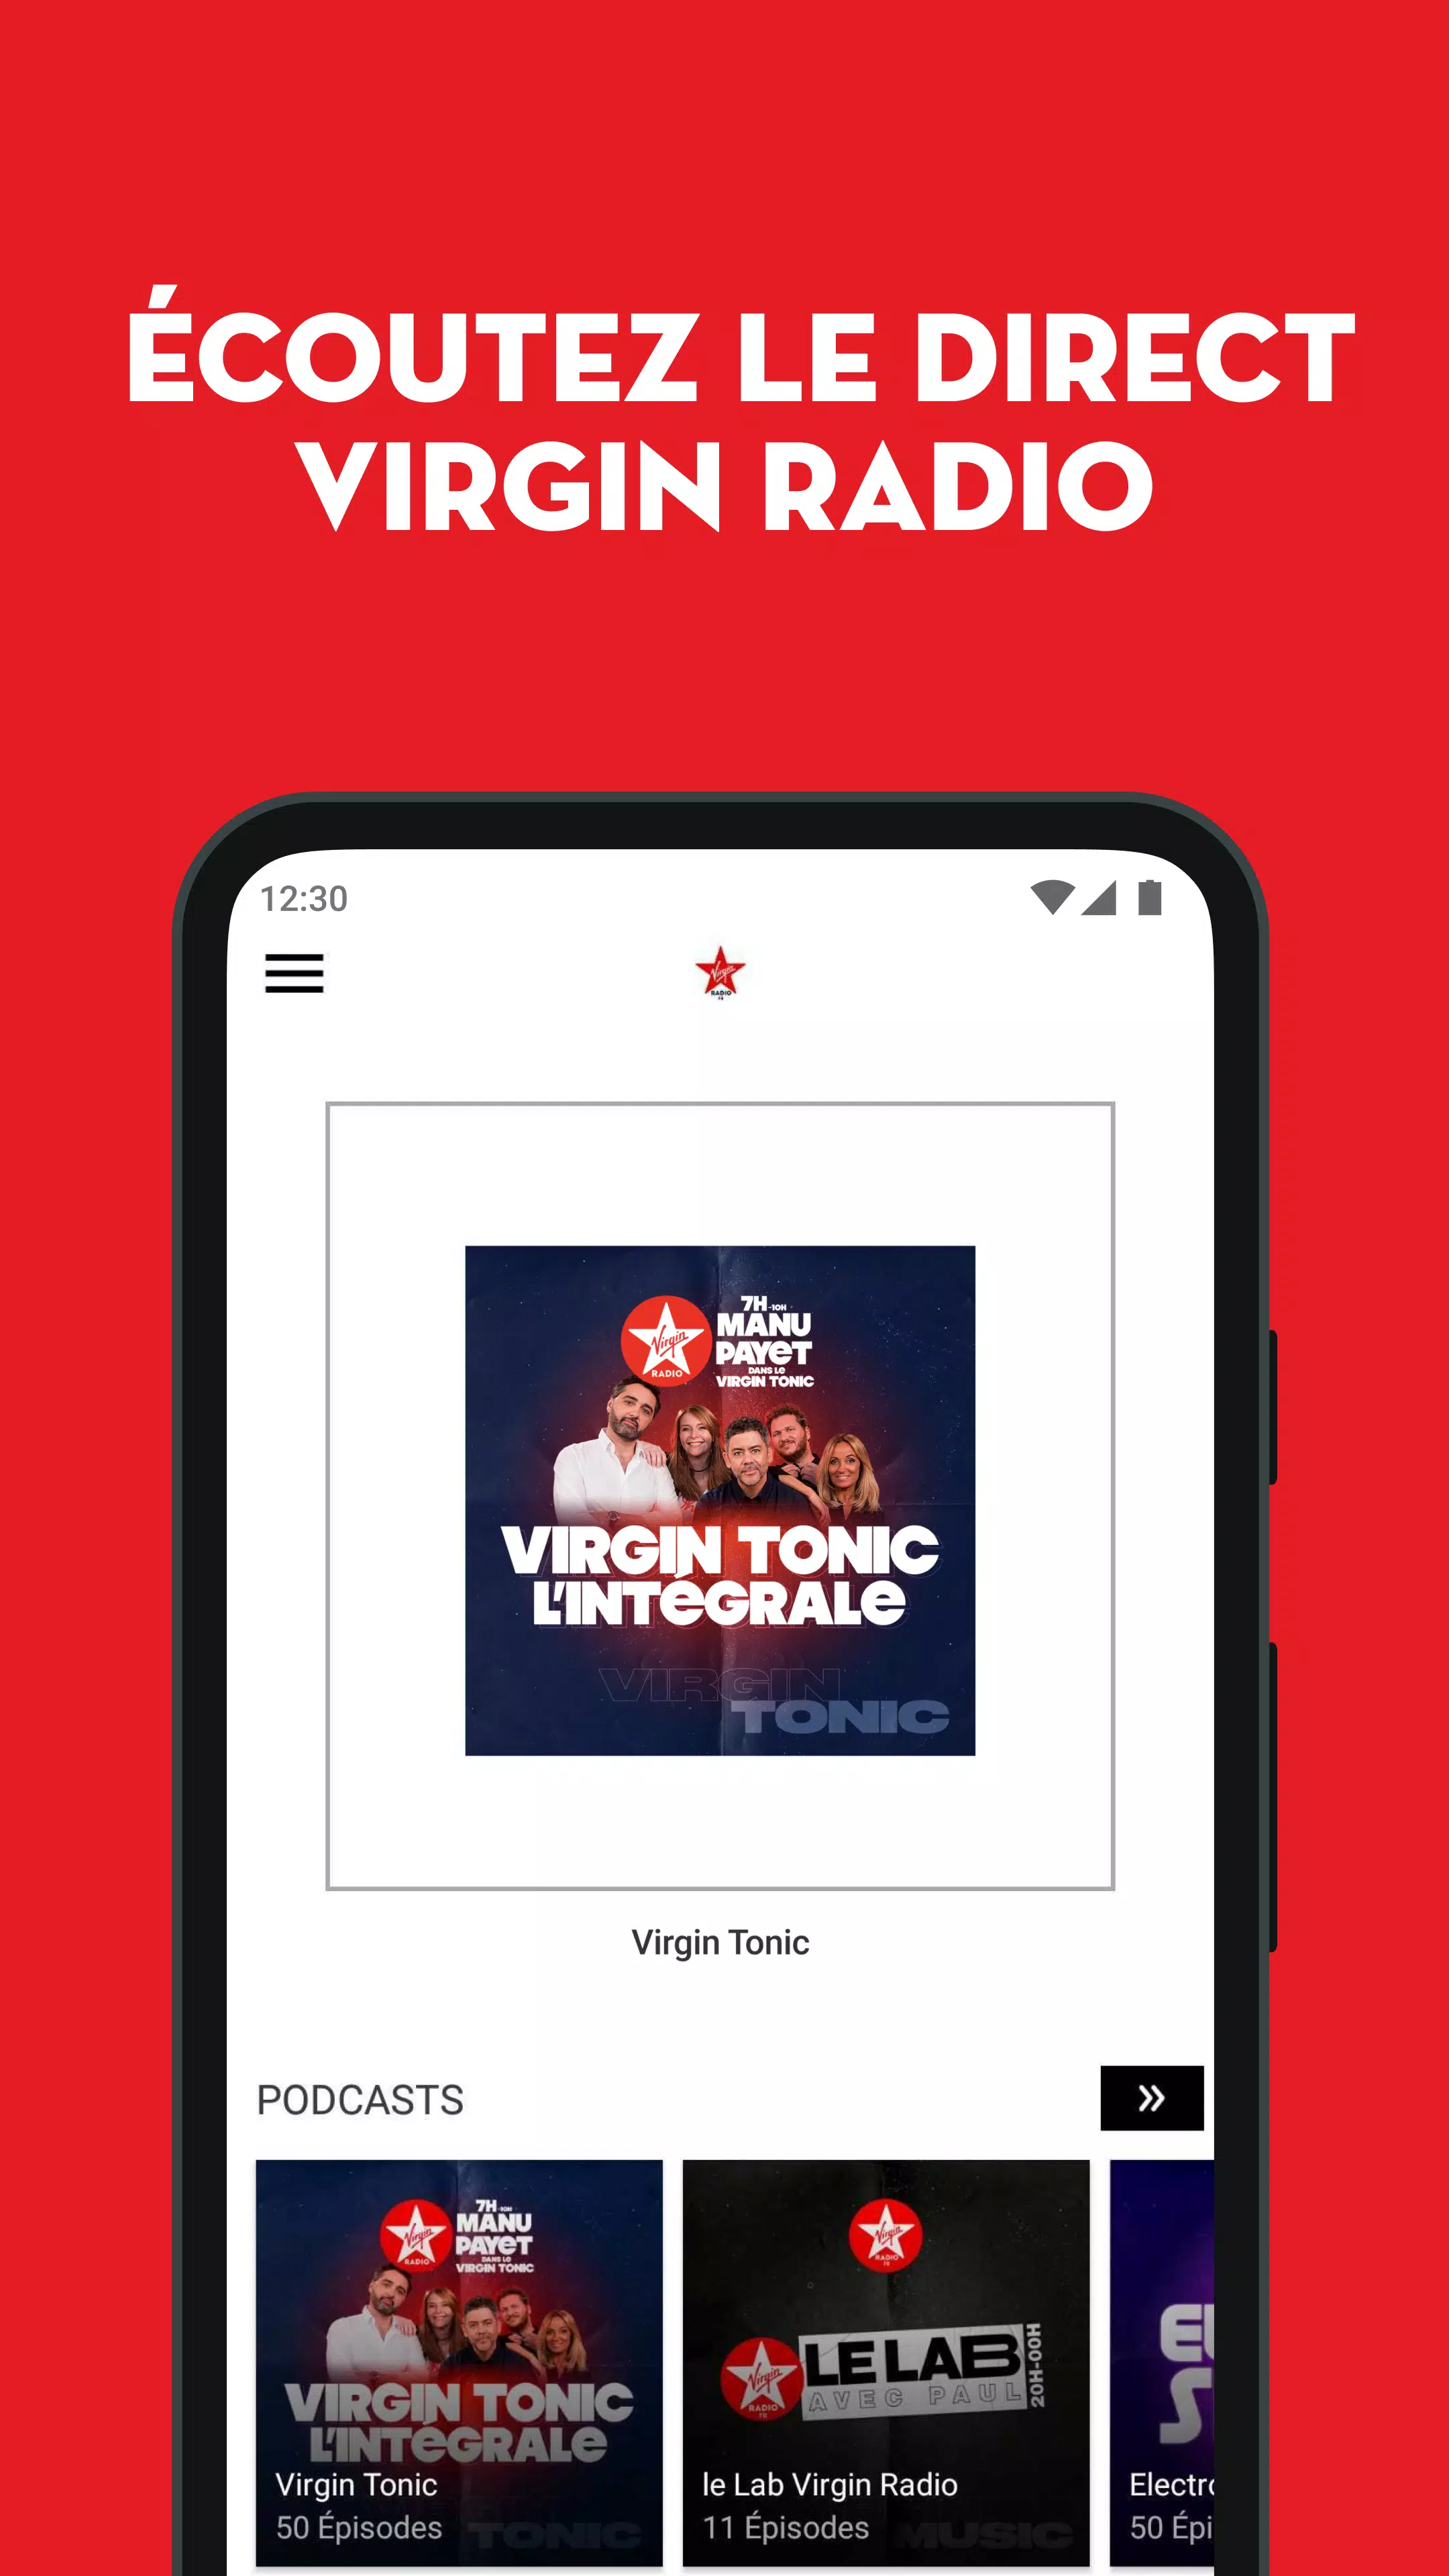 Virgin Radio Fr APK pour Android Télécharger